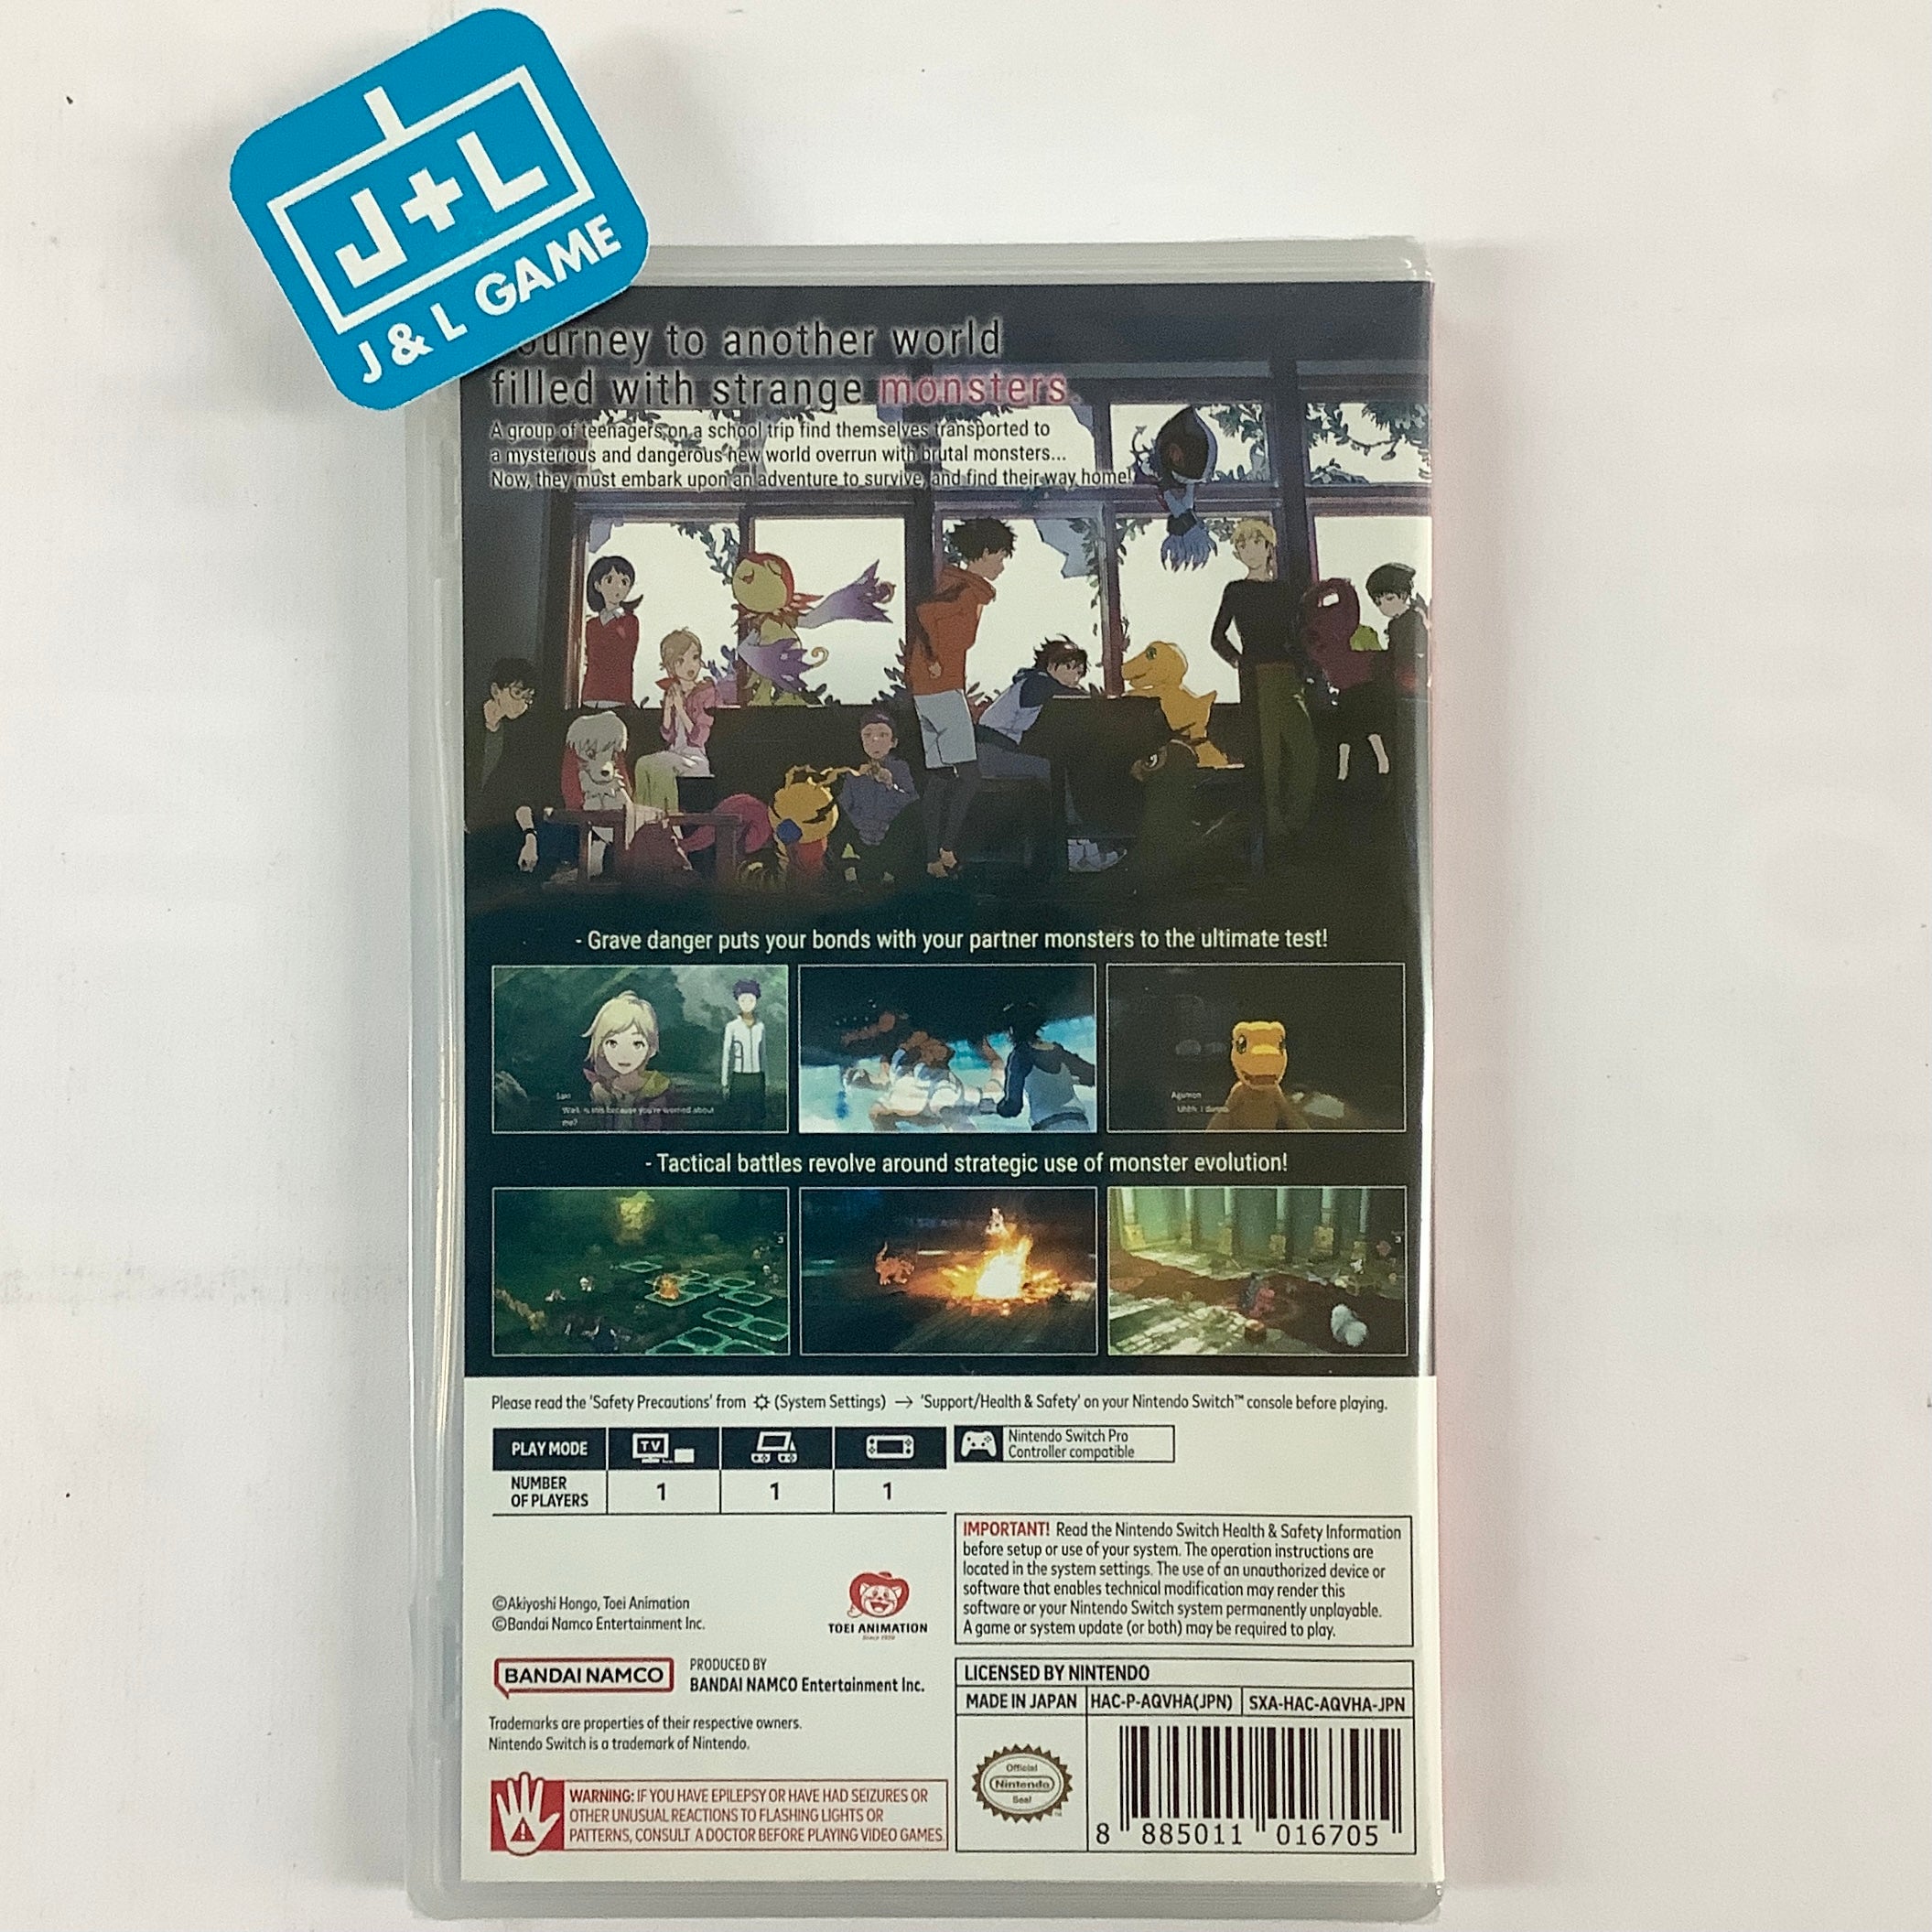 Digimon Survive (English Subtitle) - (NSW) Nintendo Switch (Asia Import) Video Games BANDAI NAMCO Entertainment   